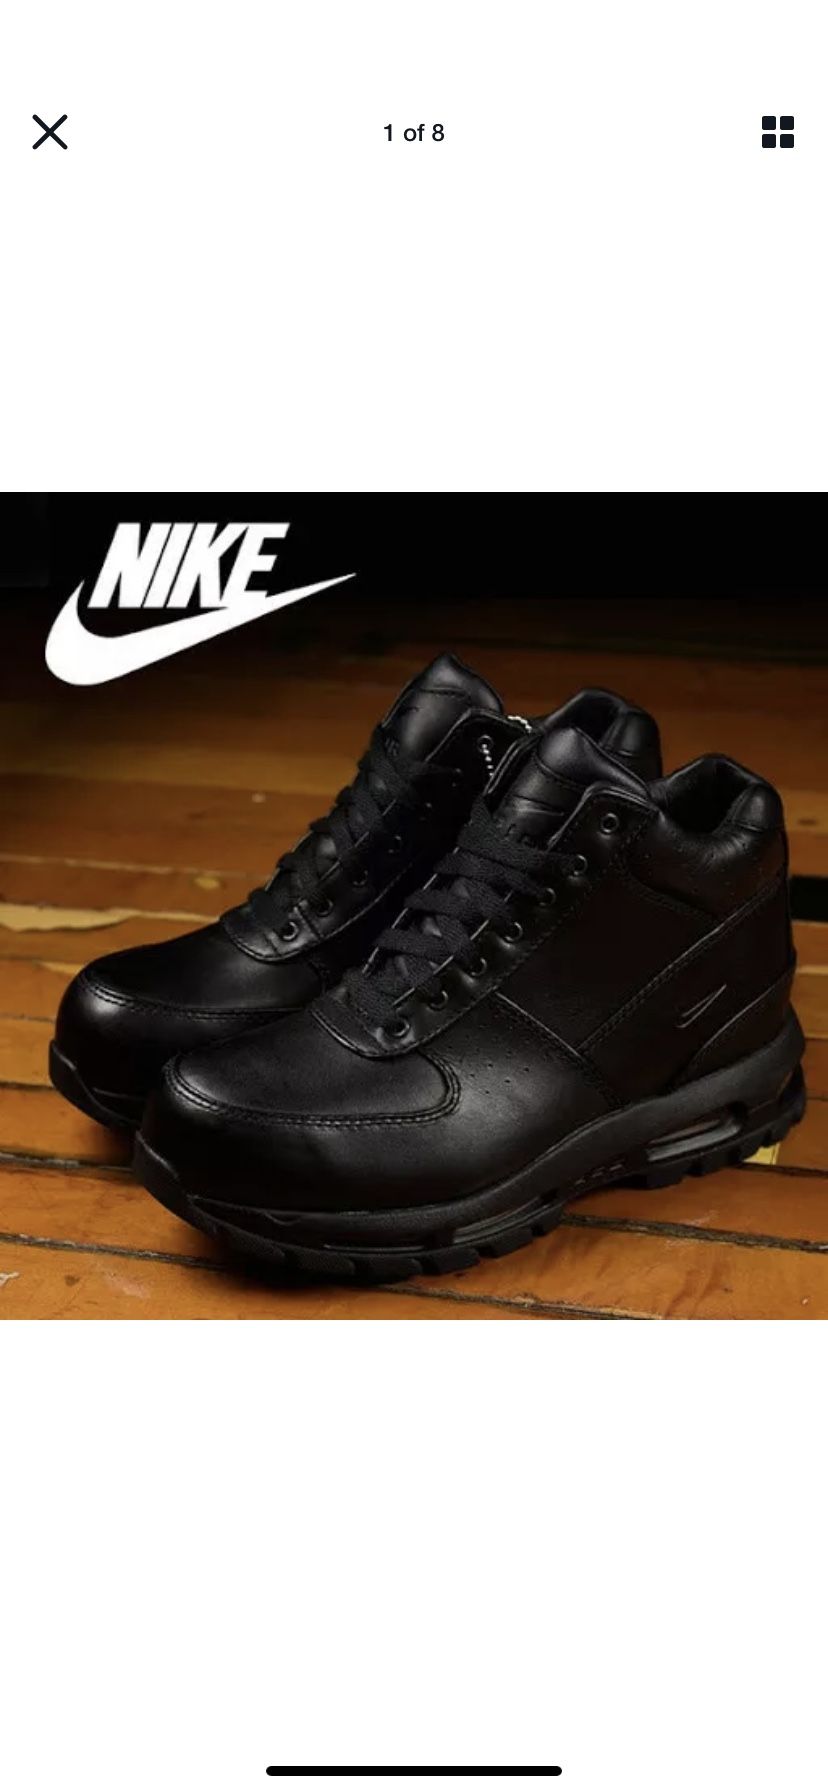 Nike ACG Air Max Goadome 2013 Leather Boots Triple Black Out 599474-050 SZ 10